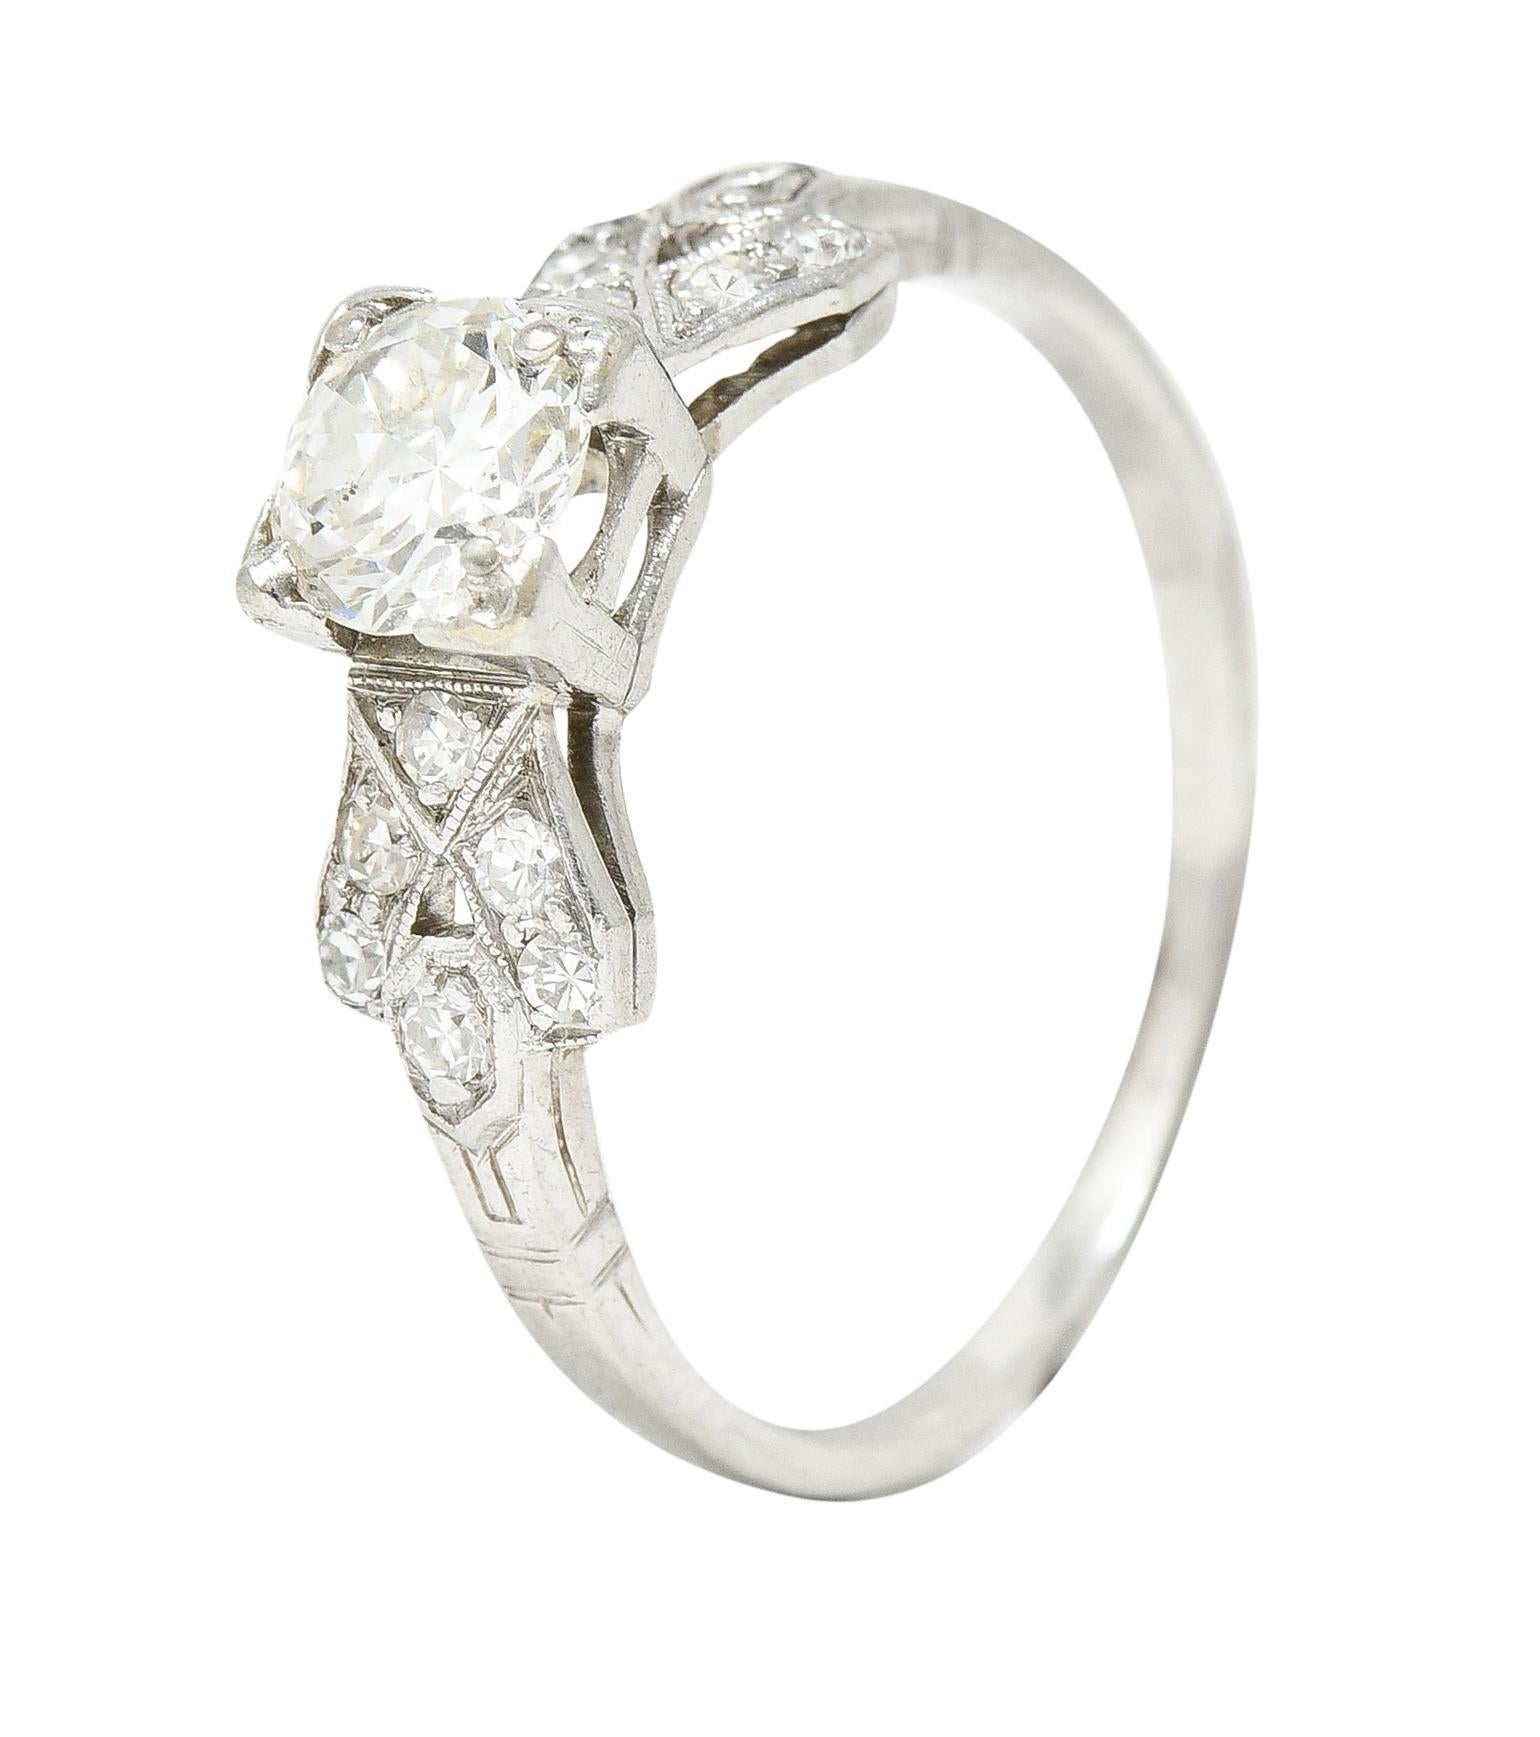 Late Art Deco 0.64 Carat Transitional Cut Diamond Platinum Engagement Ring For Sale 3